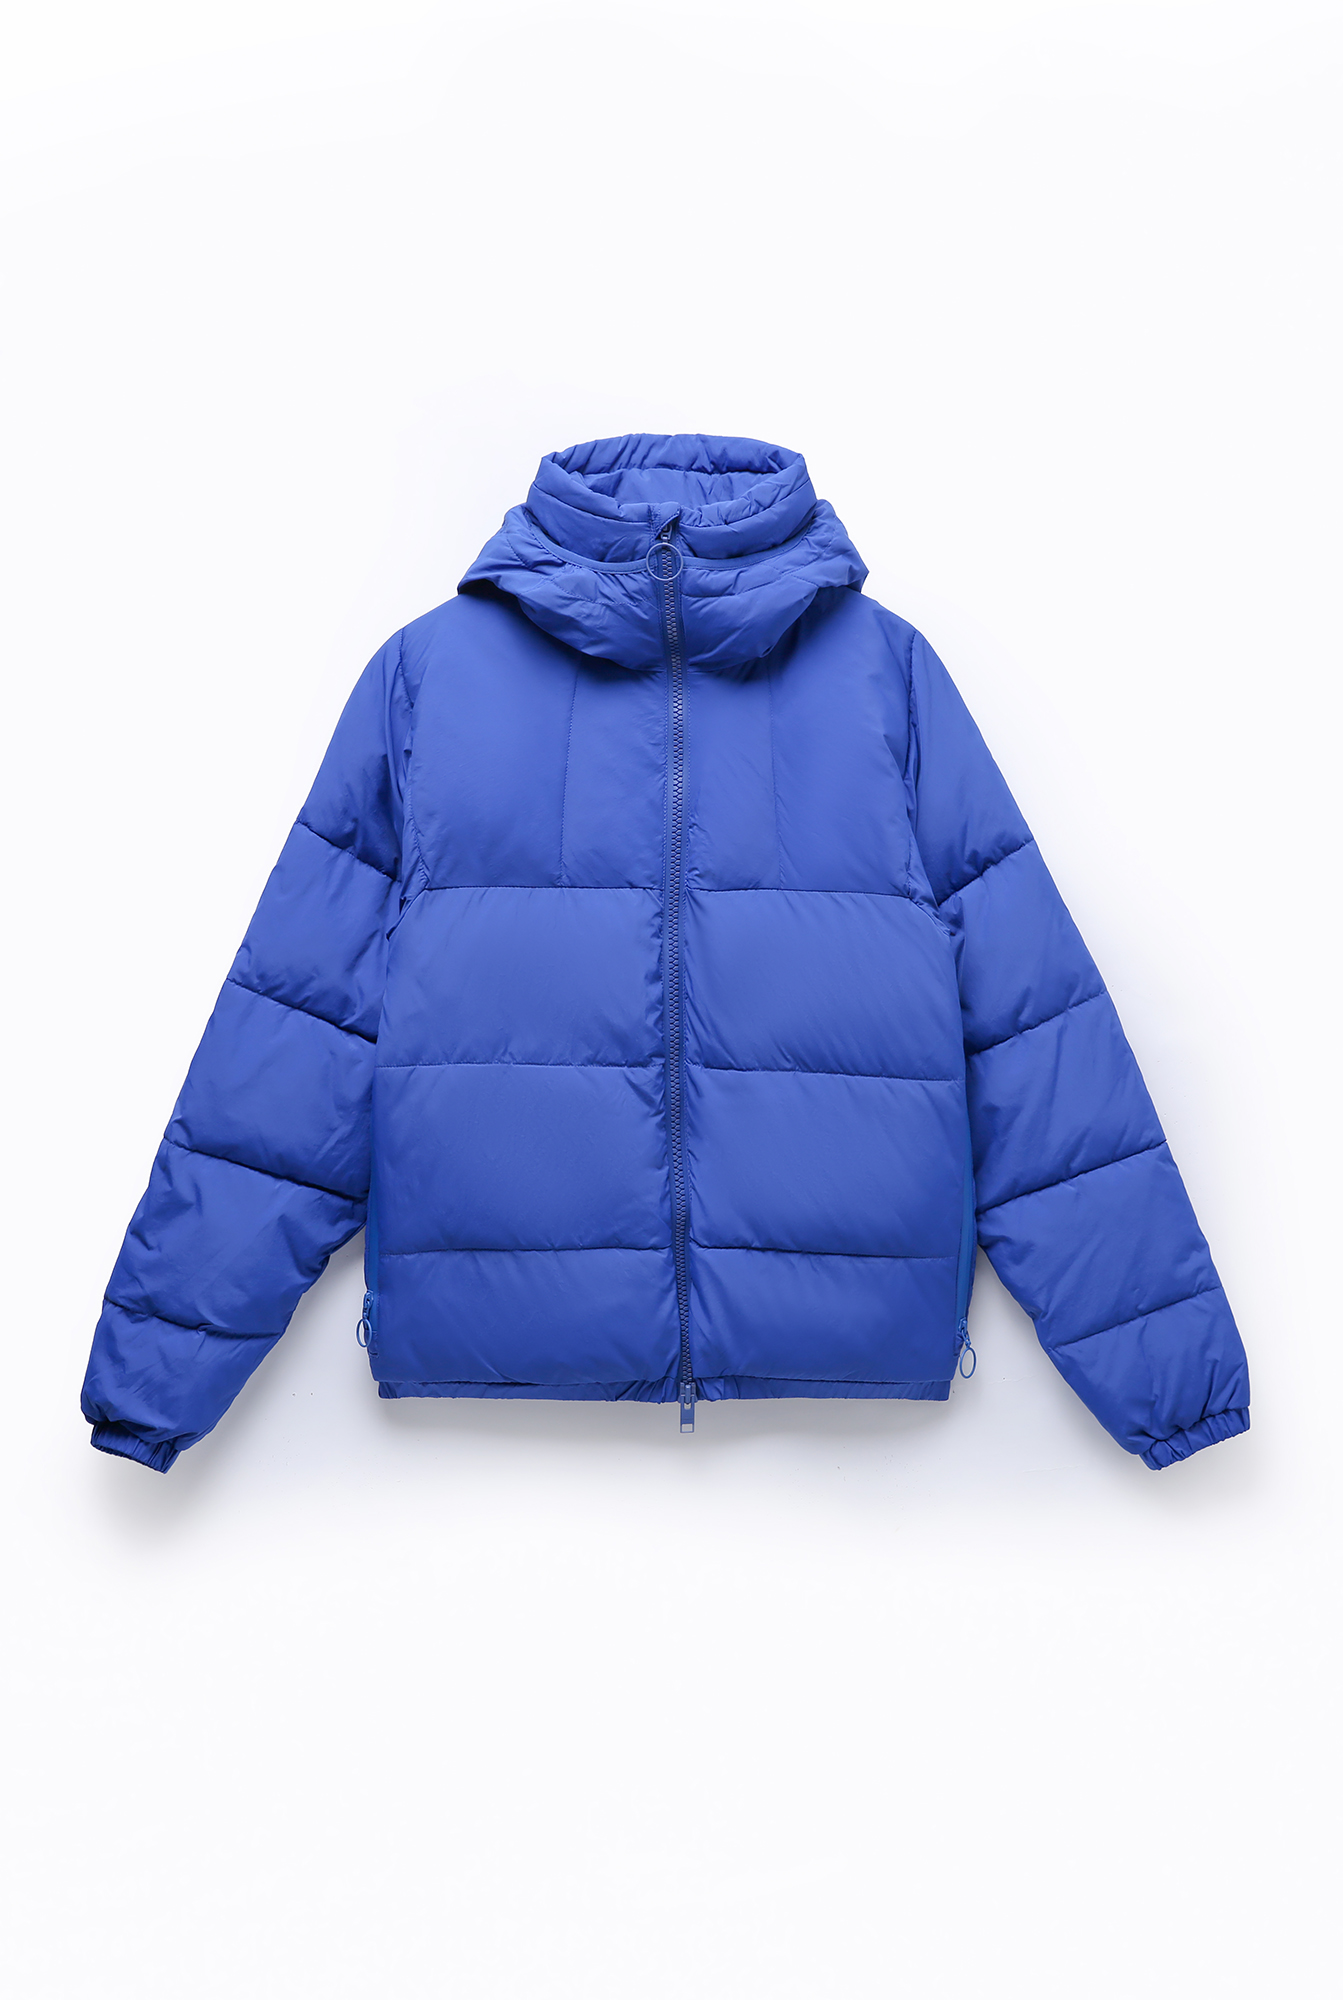 Telkwa Puffer Jacket Emb Blue via Shop Like You Give a Damn